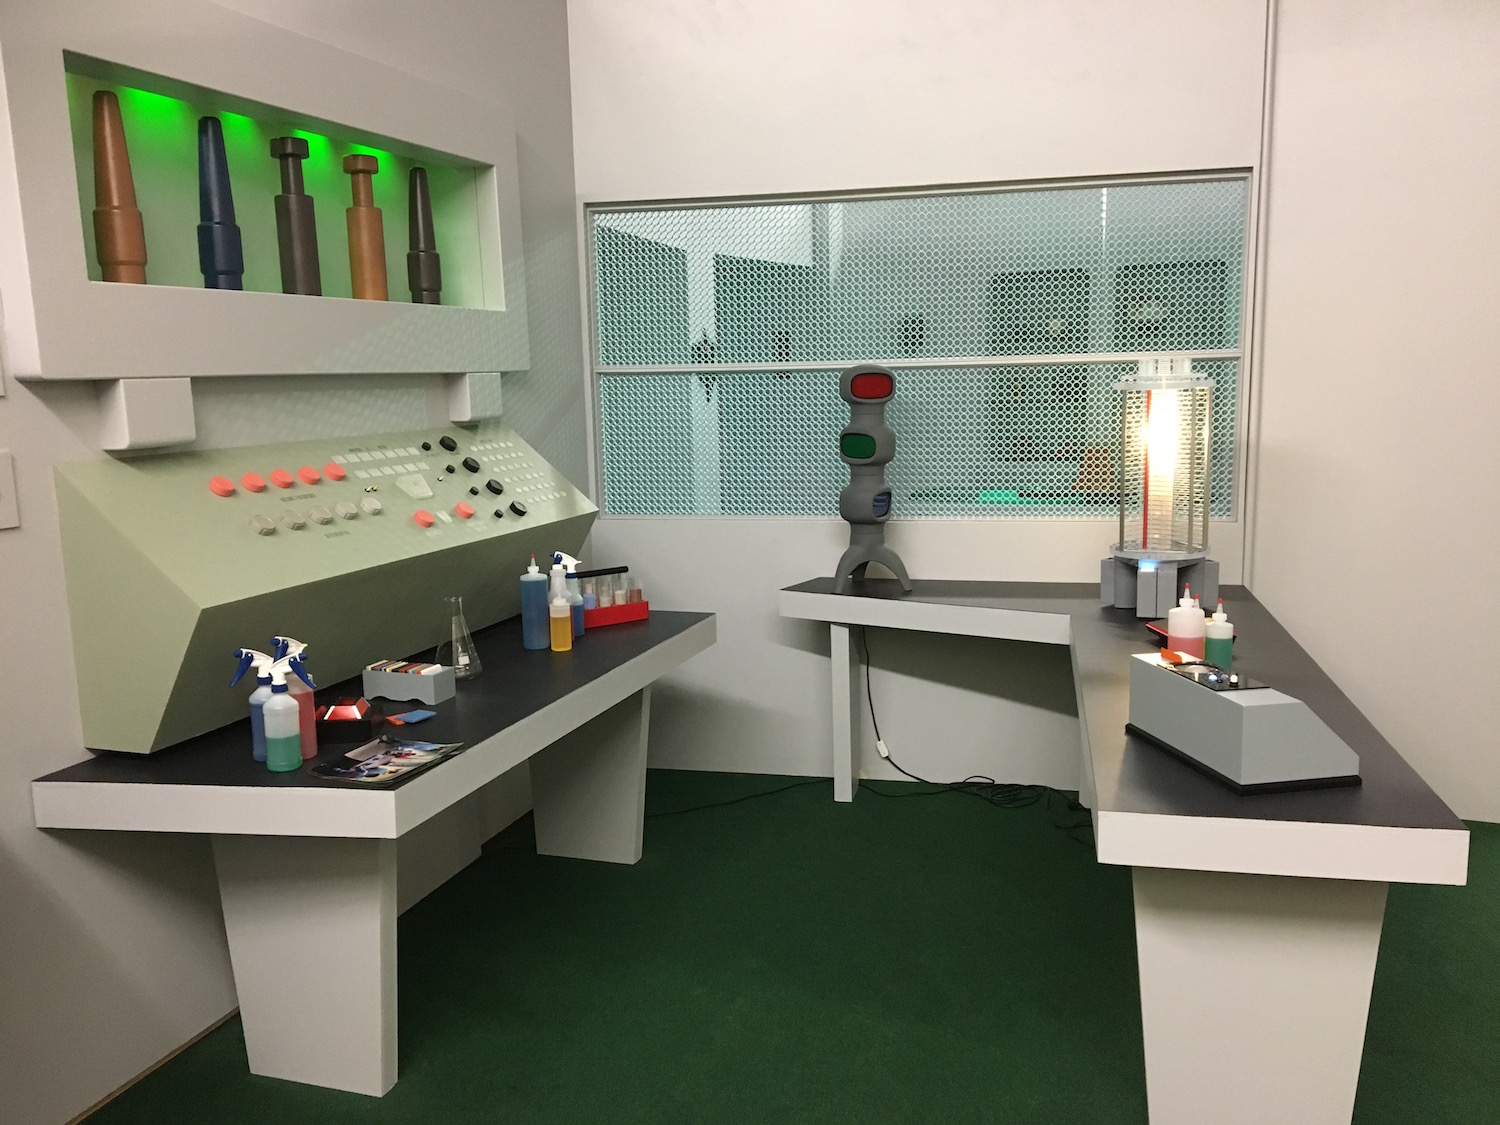  Equipment Inside Evaluation Laboratory ©2017 David R. George III 